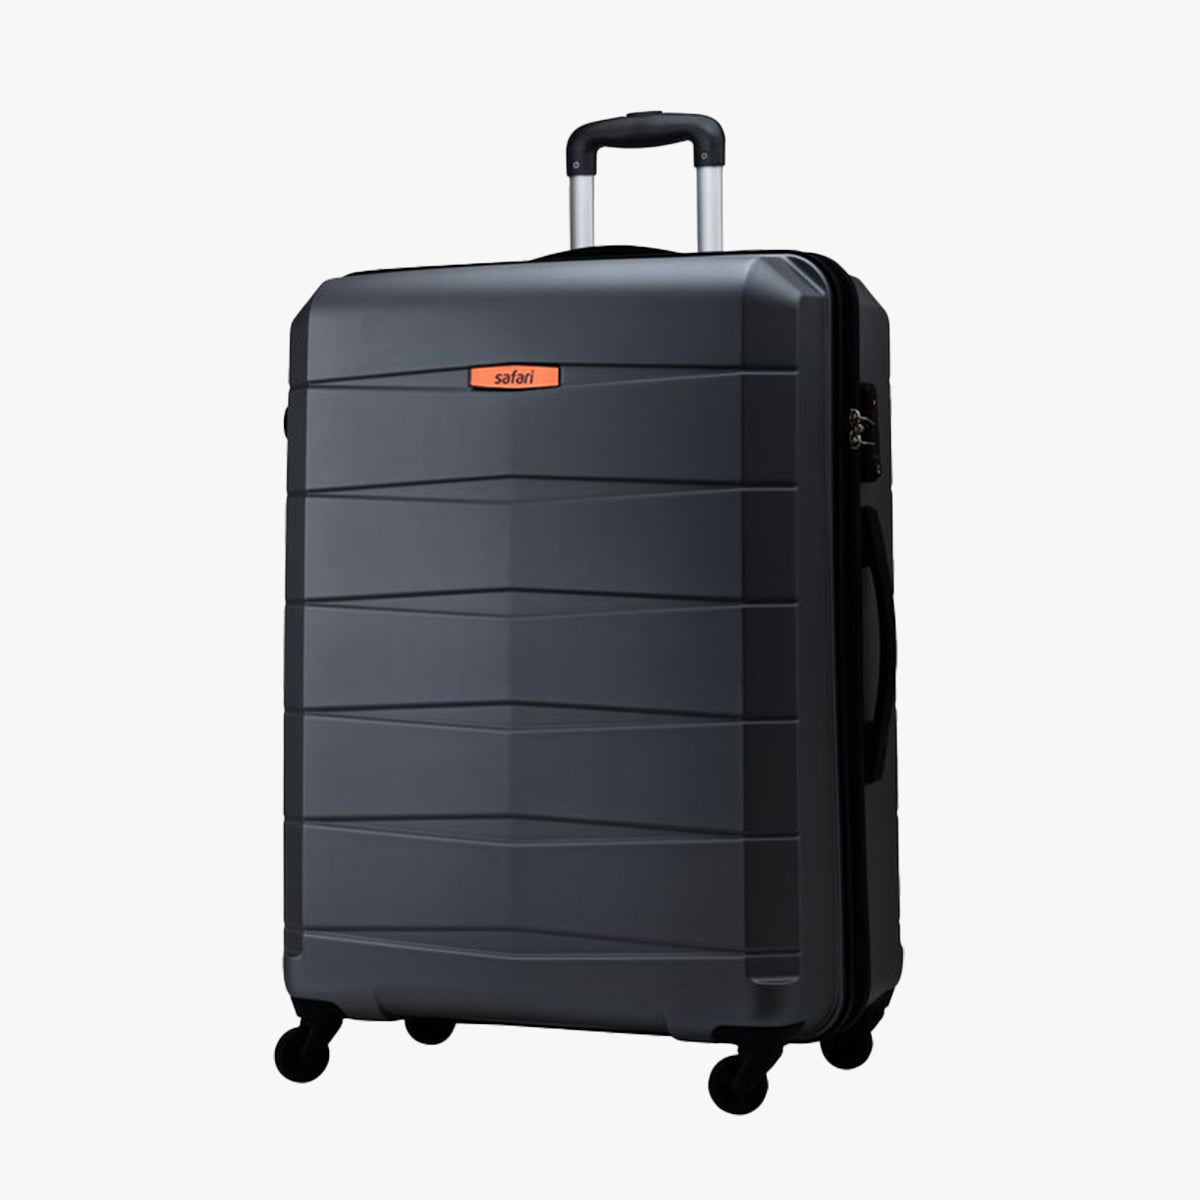 Regloss Antiscratch Hard Luggage Combo Set (Cabin, Medium, Large) - Black